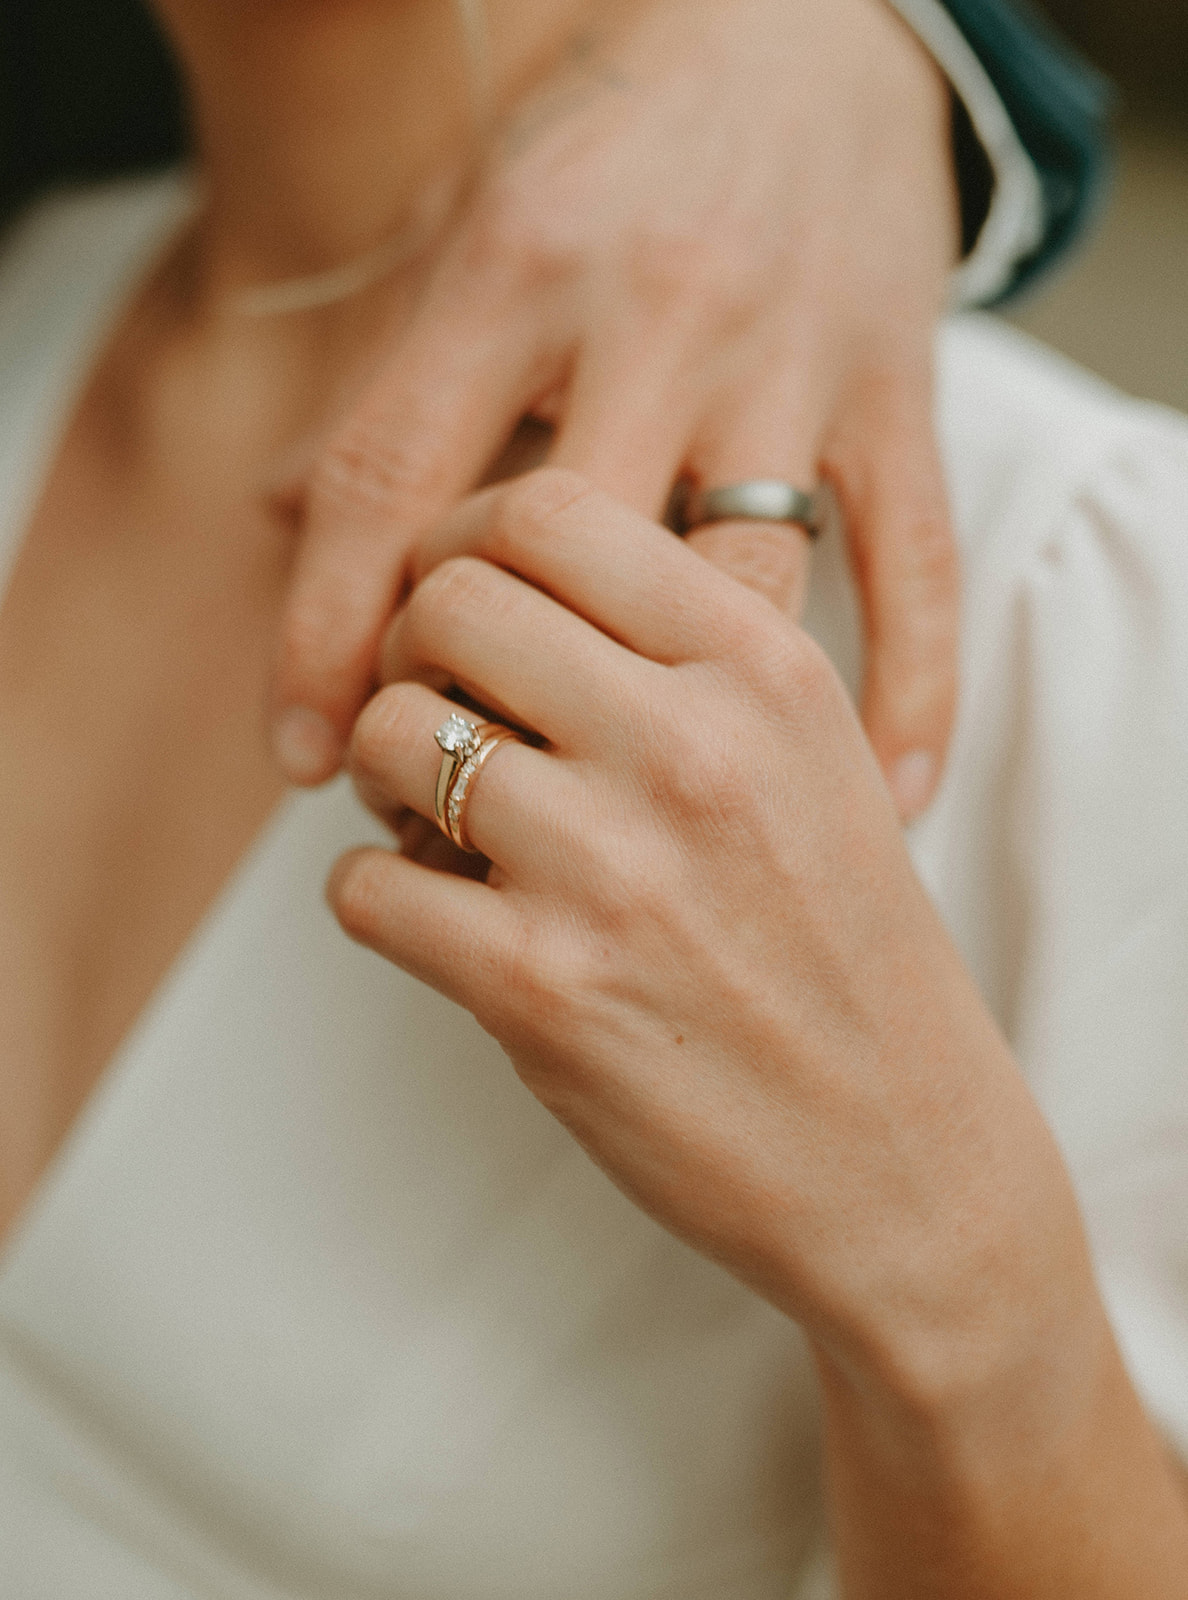 Minimalist wedding in Calgary Alberta - engagement ring, wedding rings